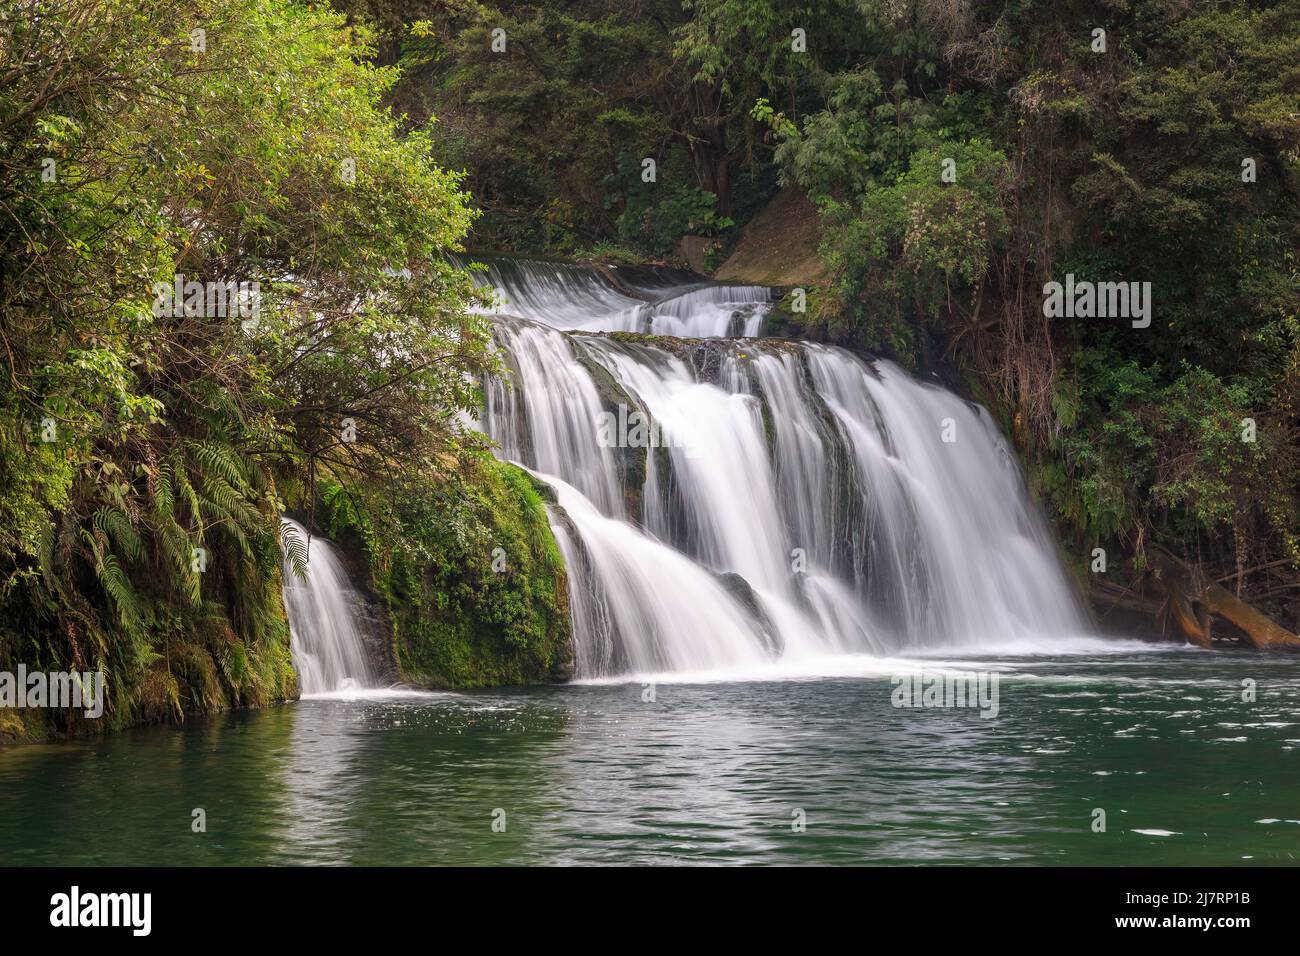 Maraetotara Falls, a beautiful waterfall in native forest in the Hawke's Bay region, New Zealand Stock Photo